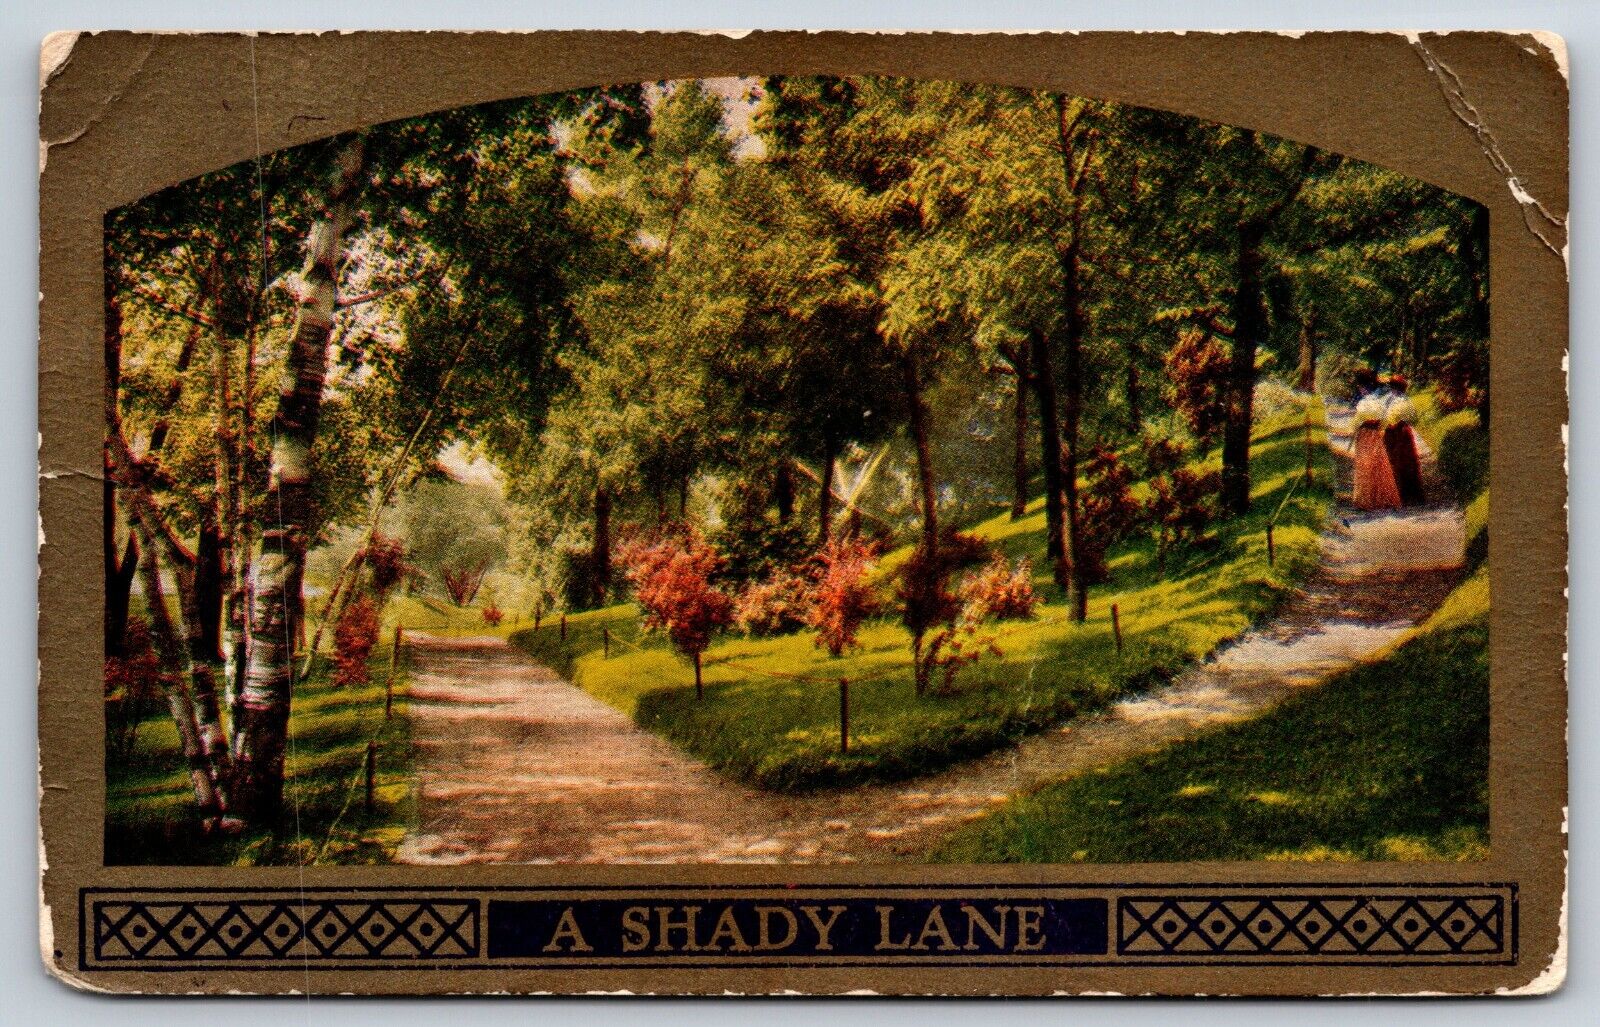 A Shady Lane, Platte City, Missouri Vintage Postcard